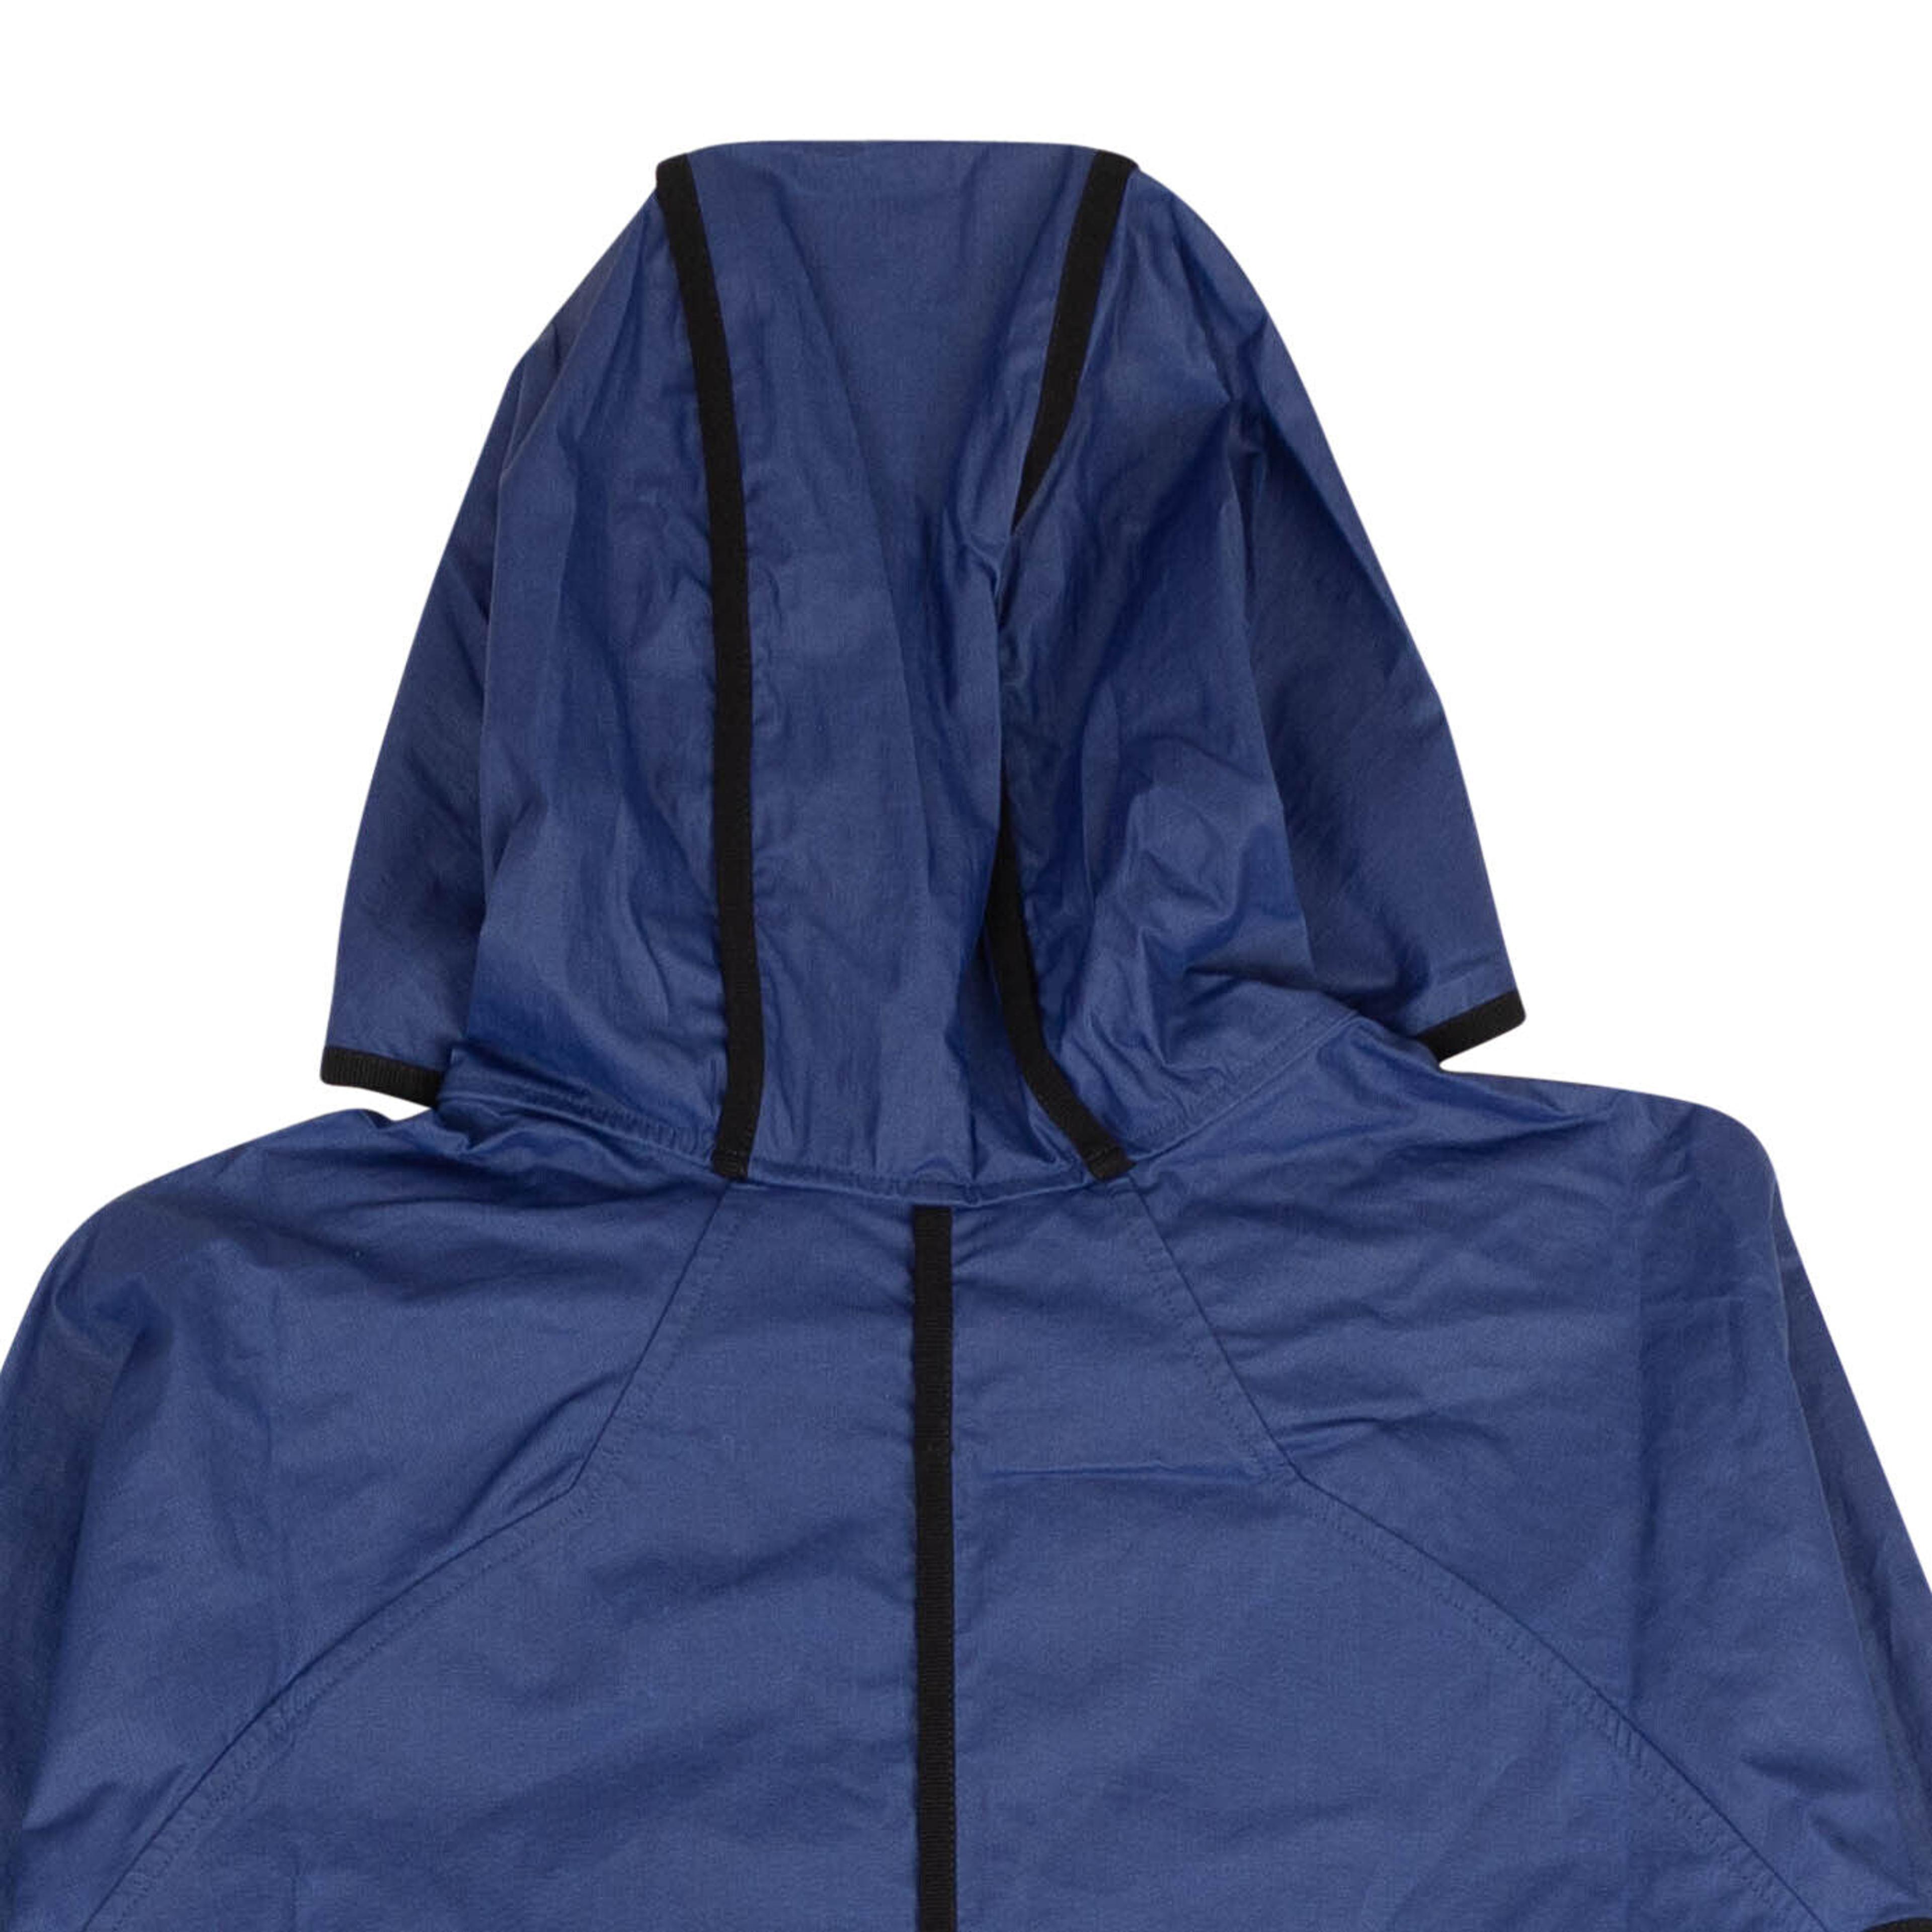 Alternate View 3 of Blue G5 Hooded Jacket